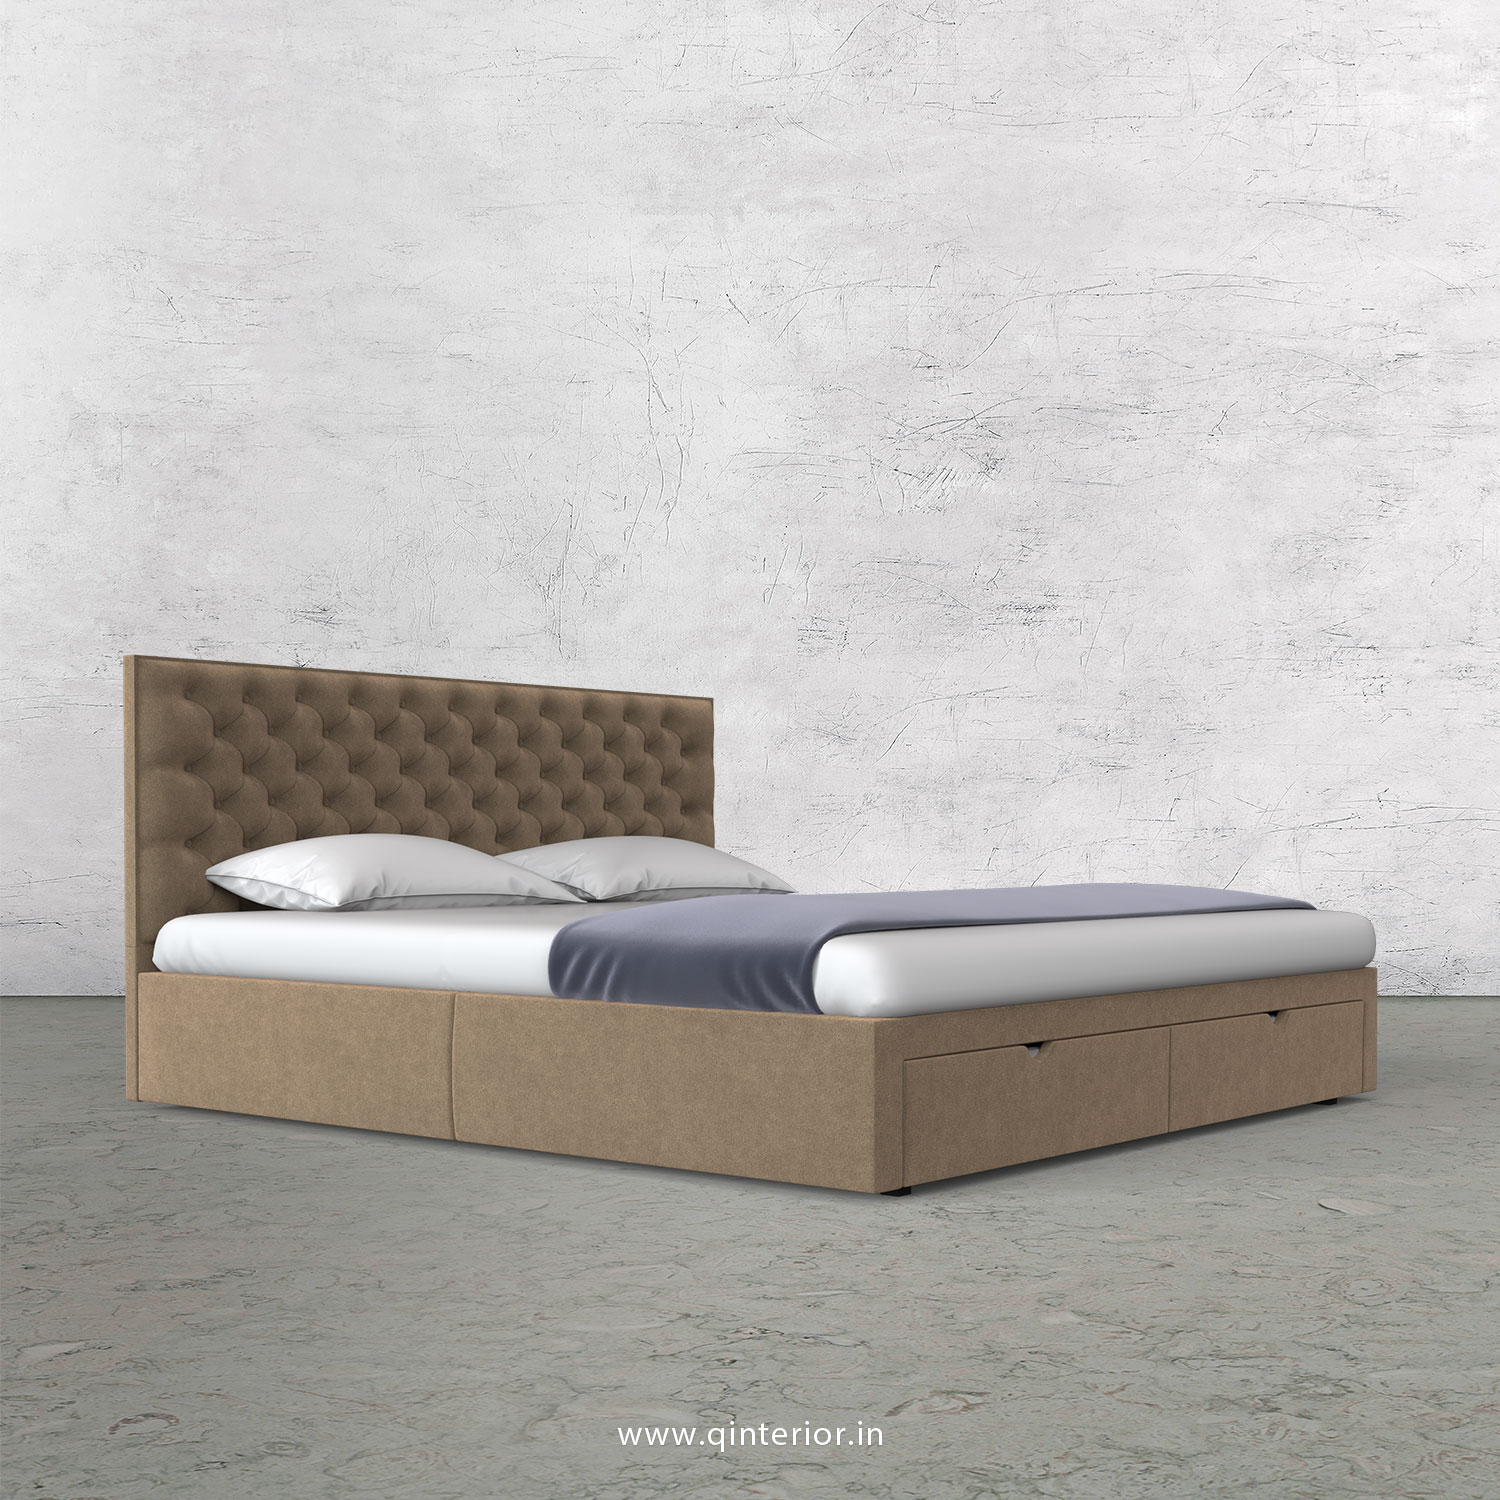 Orion King Size Storage Bed in Velvet Fabric - KBD001 VL03